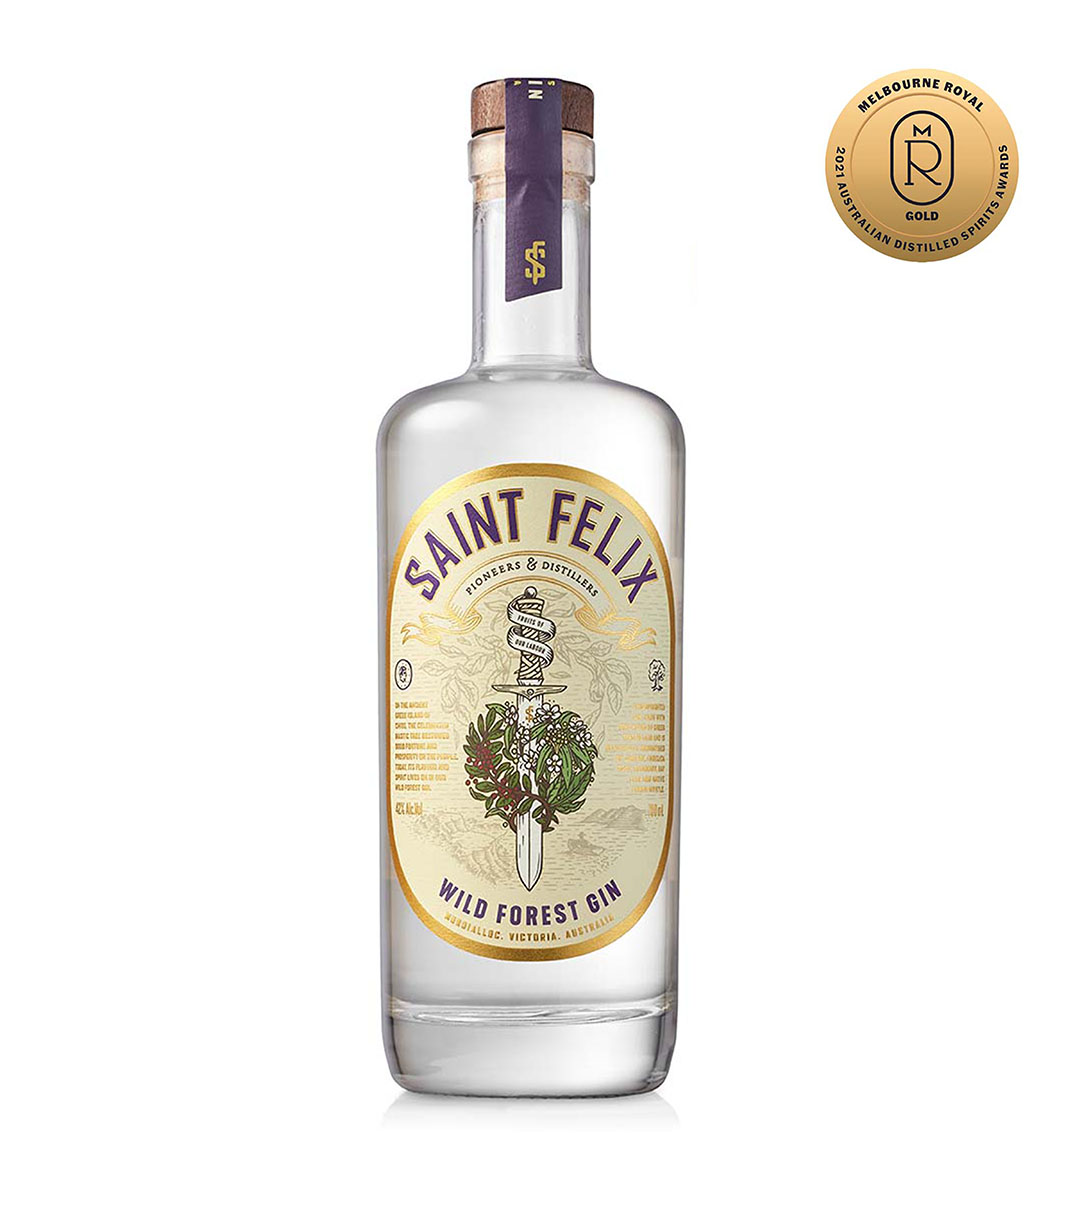 Wild Forest Gin - Saint Felix Product